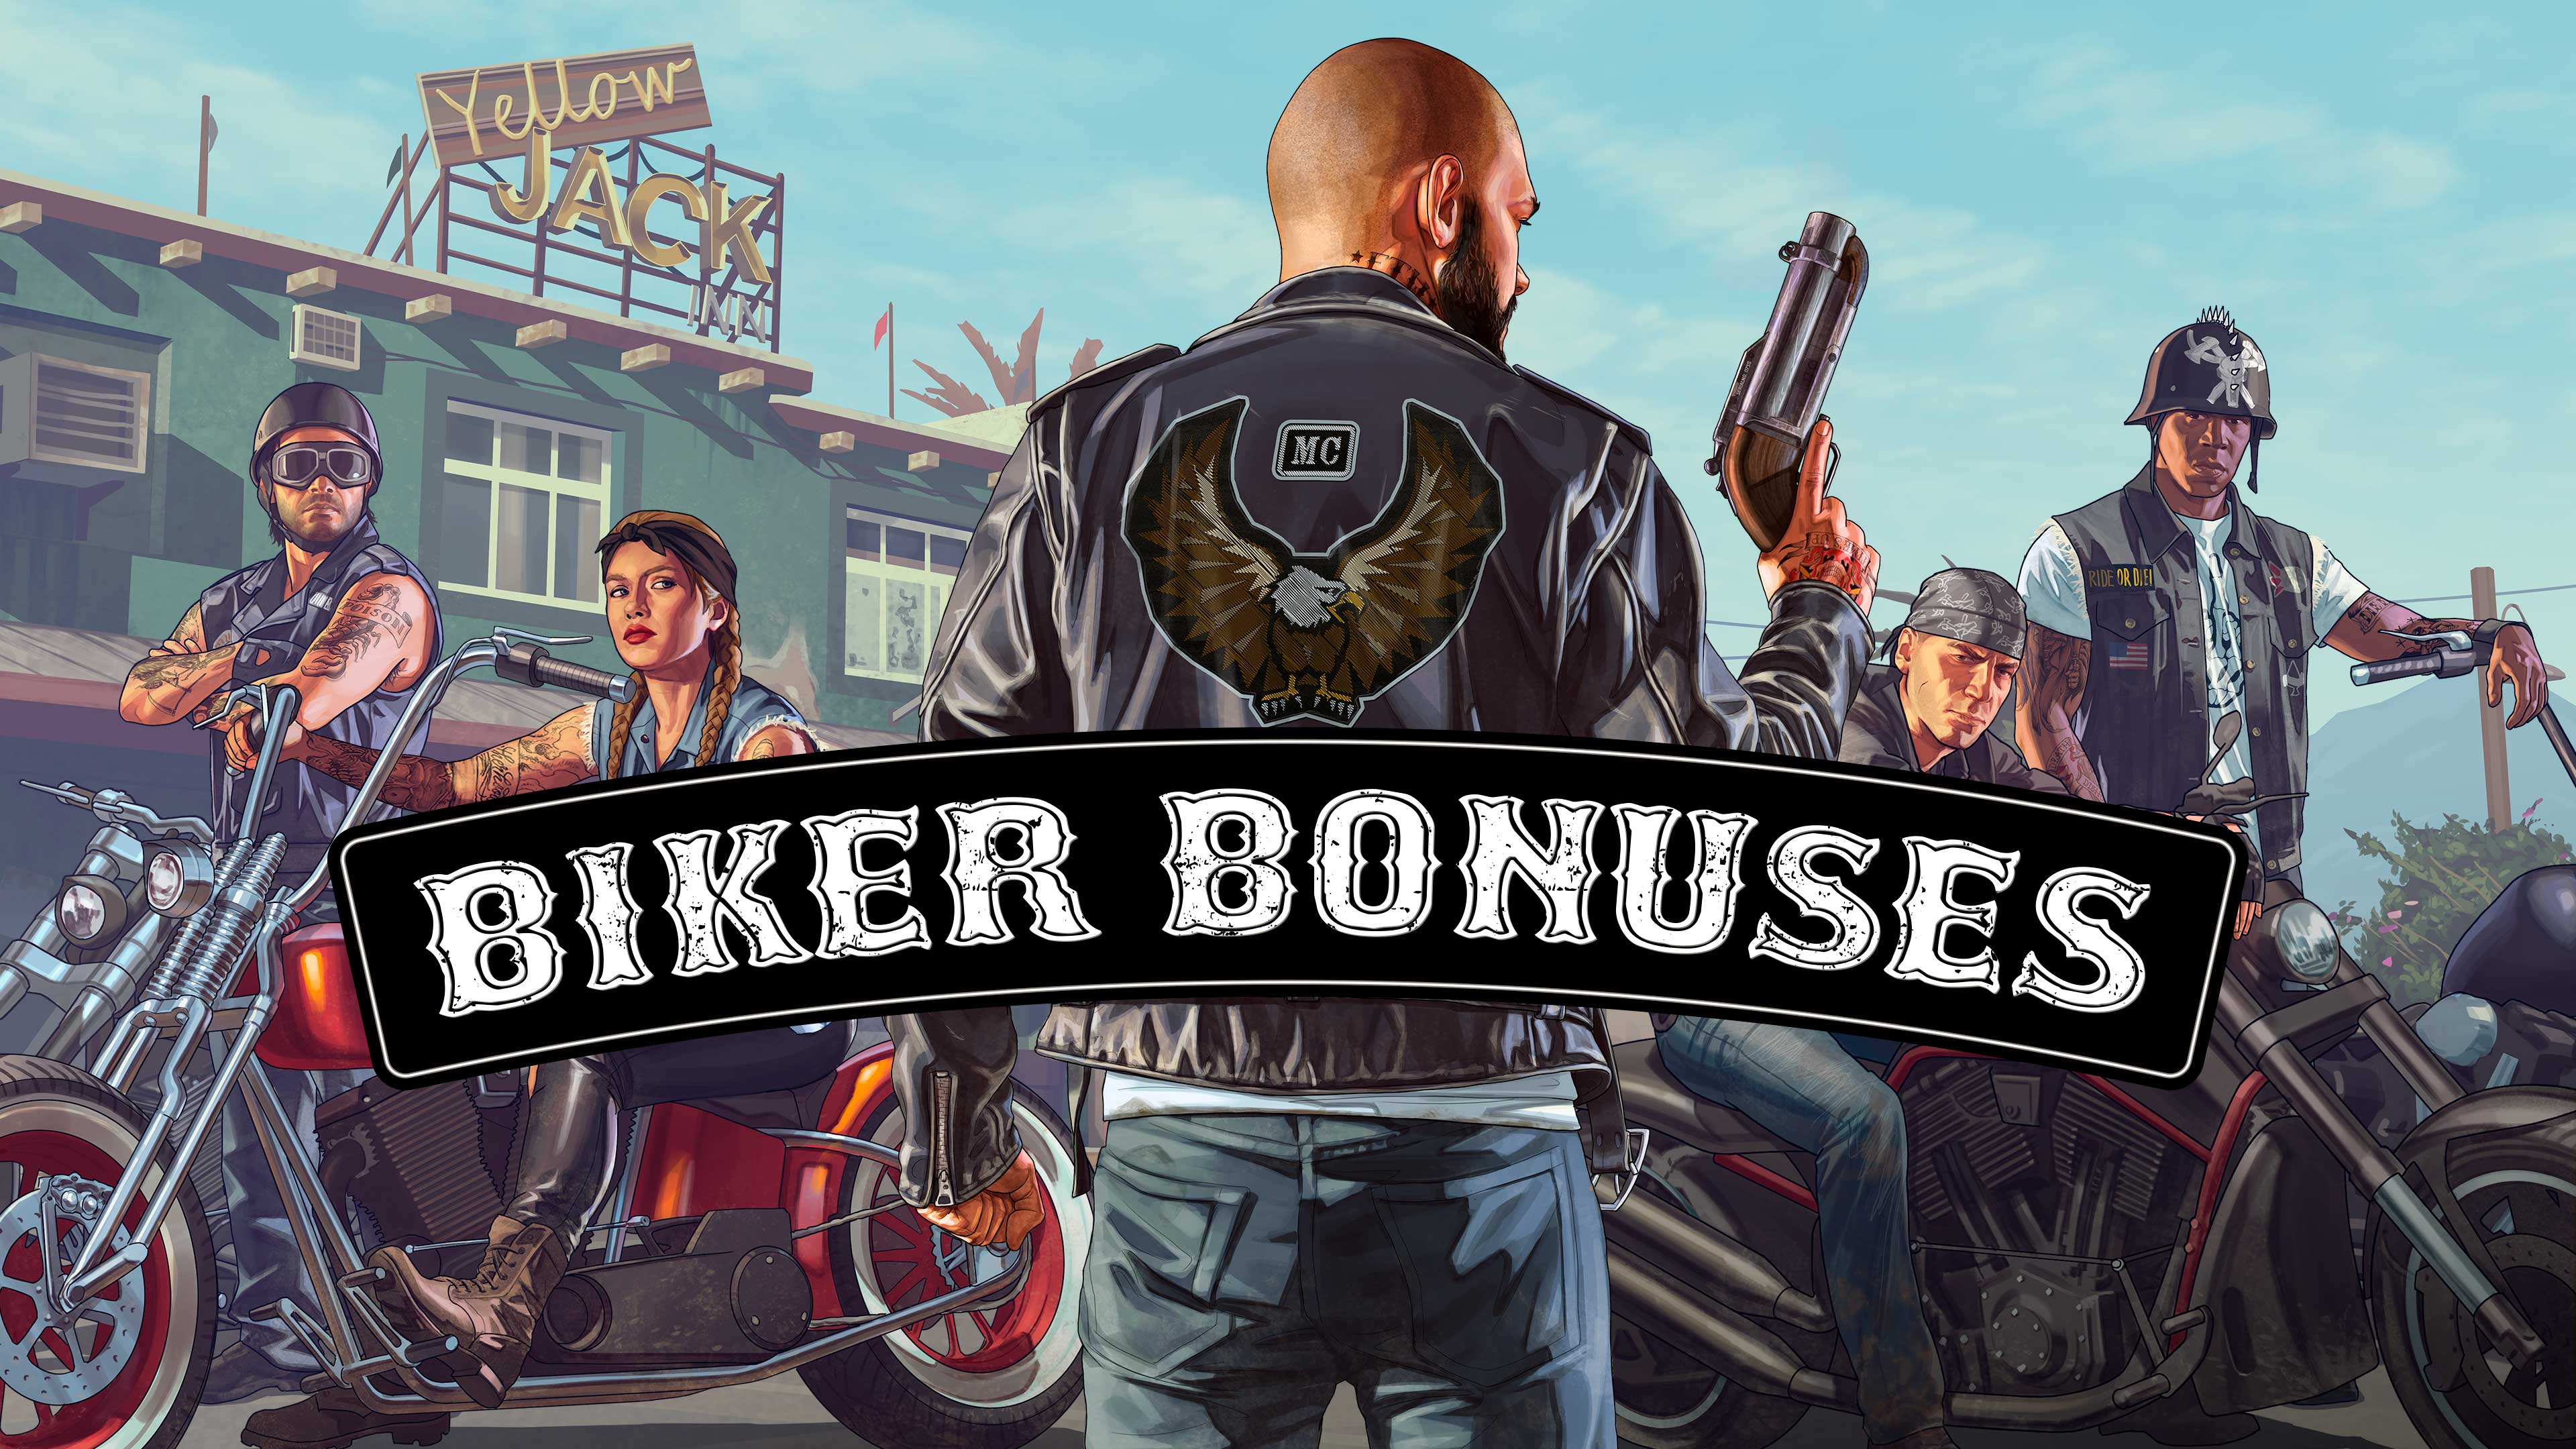 Bikers Rule the Road this Week as Business Booms - Rockstar Games